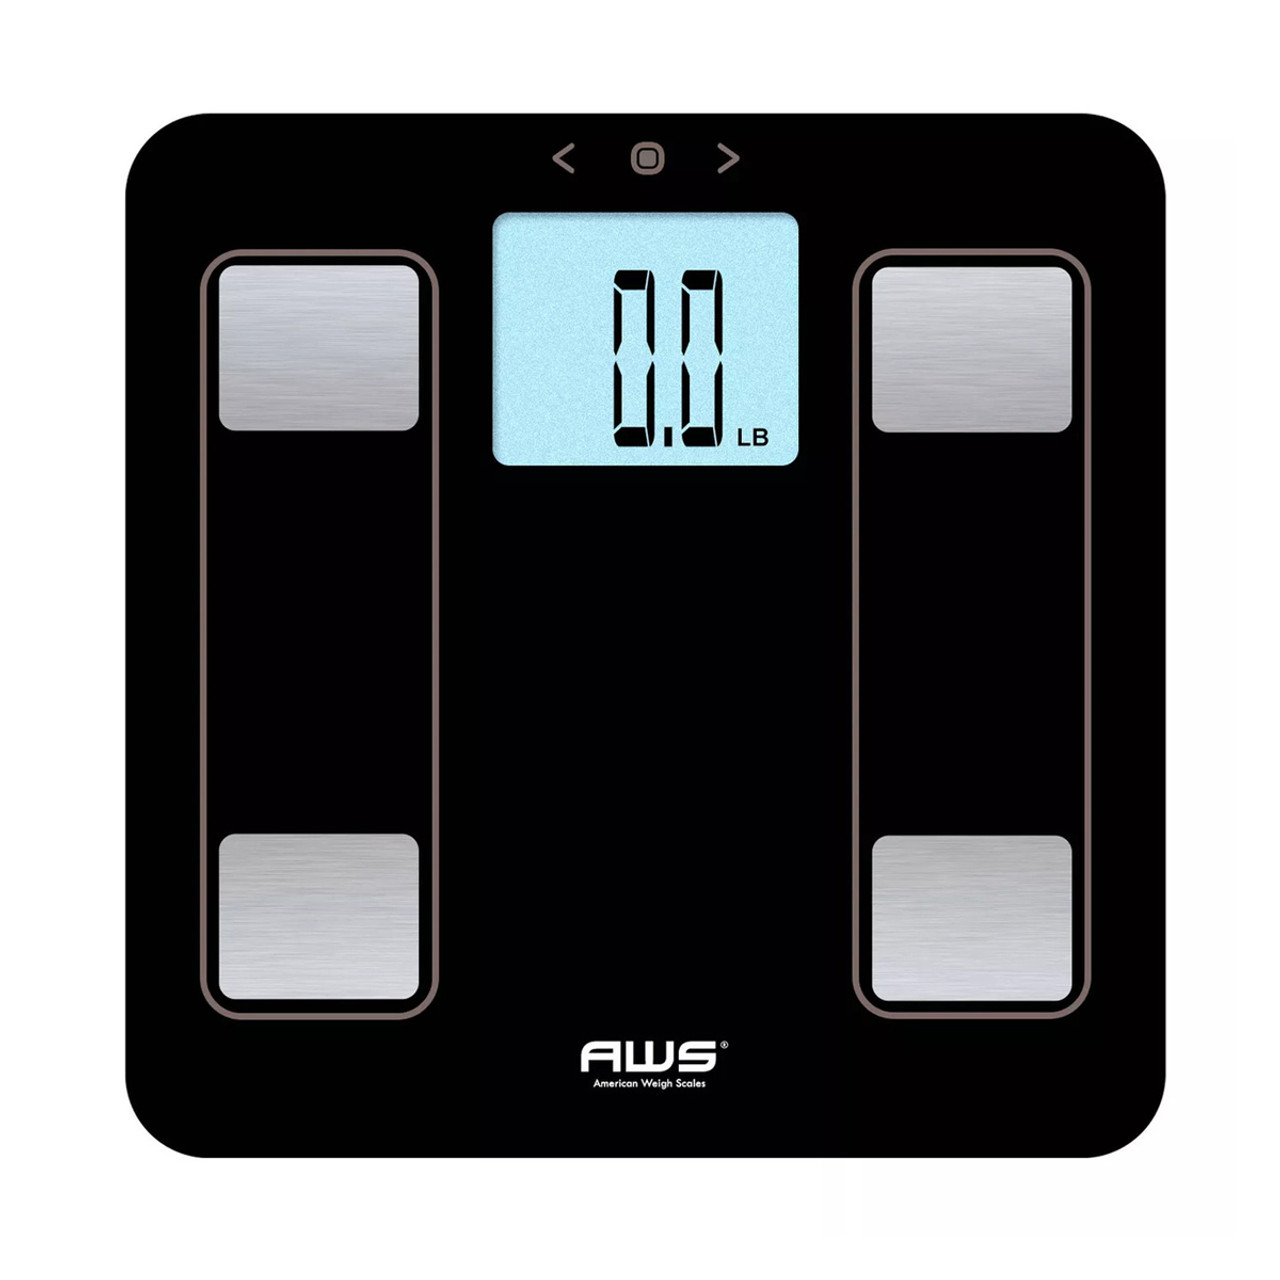 Bathroom Scale For Body Weight, Weight Scales, Digital Bathroom